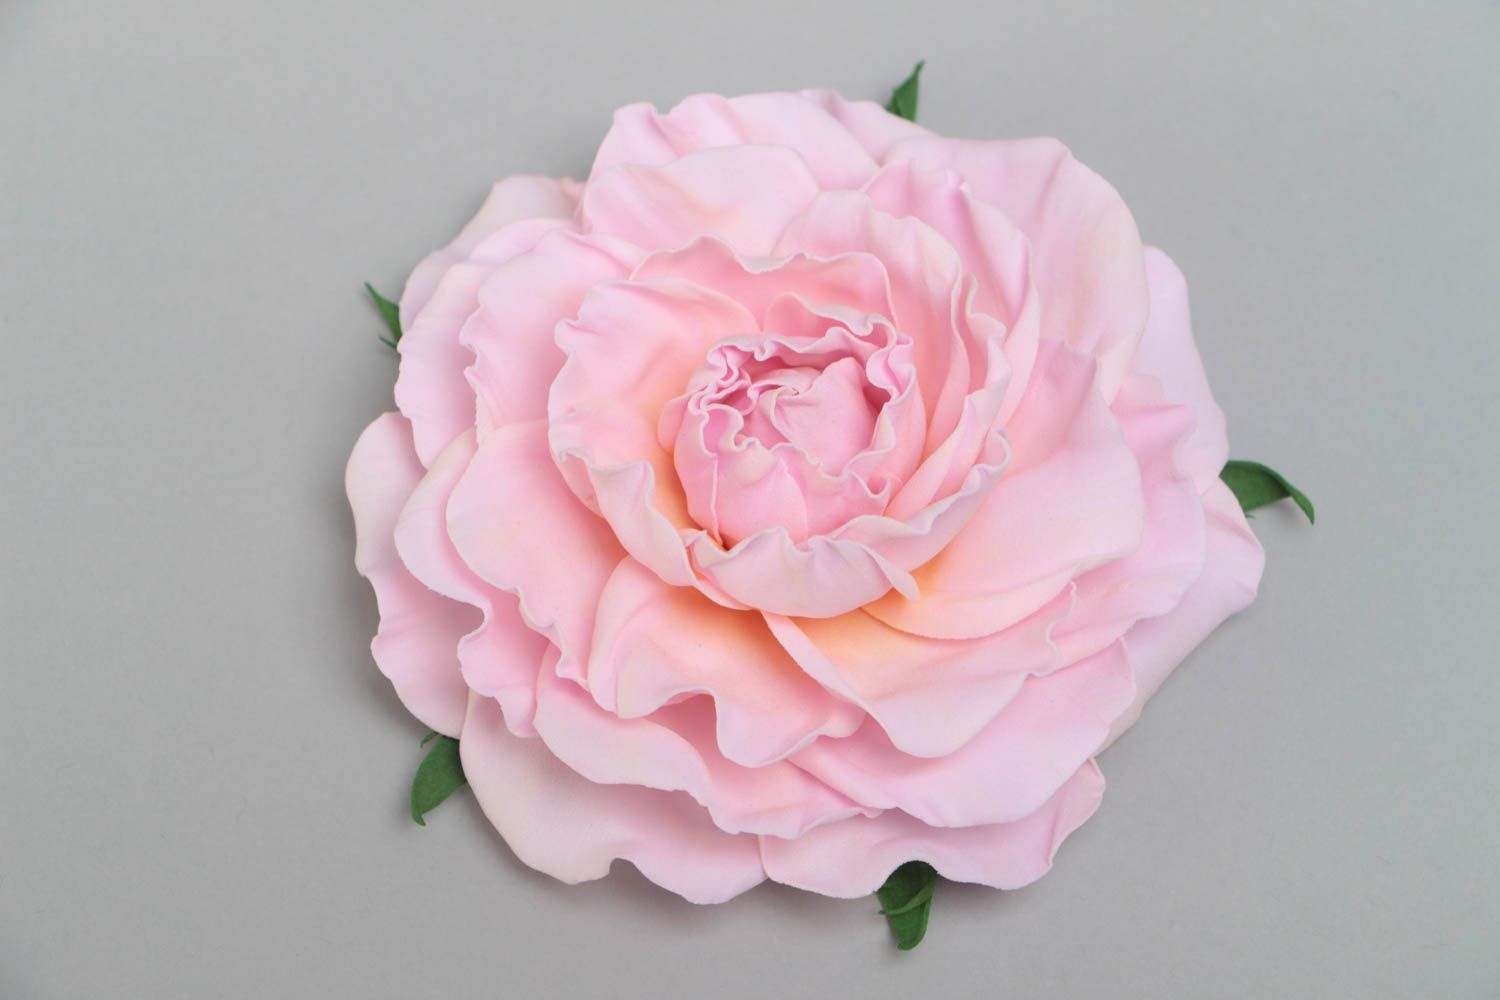 Gentle handmade designer foamiran flower for brooch making DIY Rose photo 2